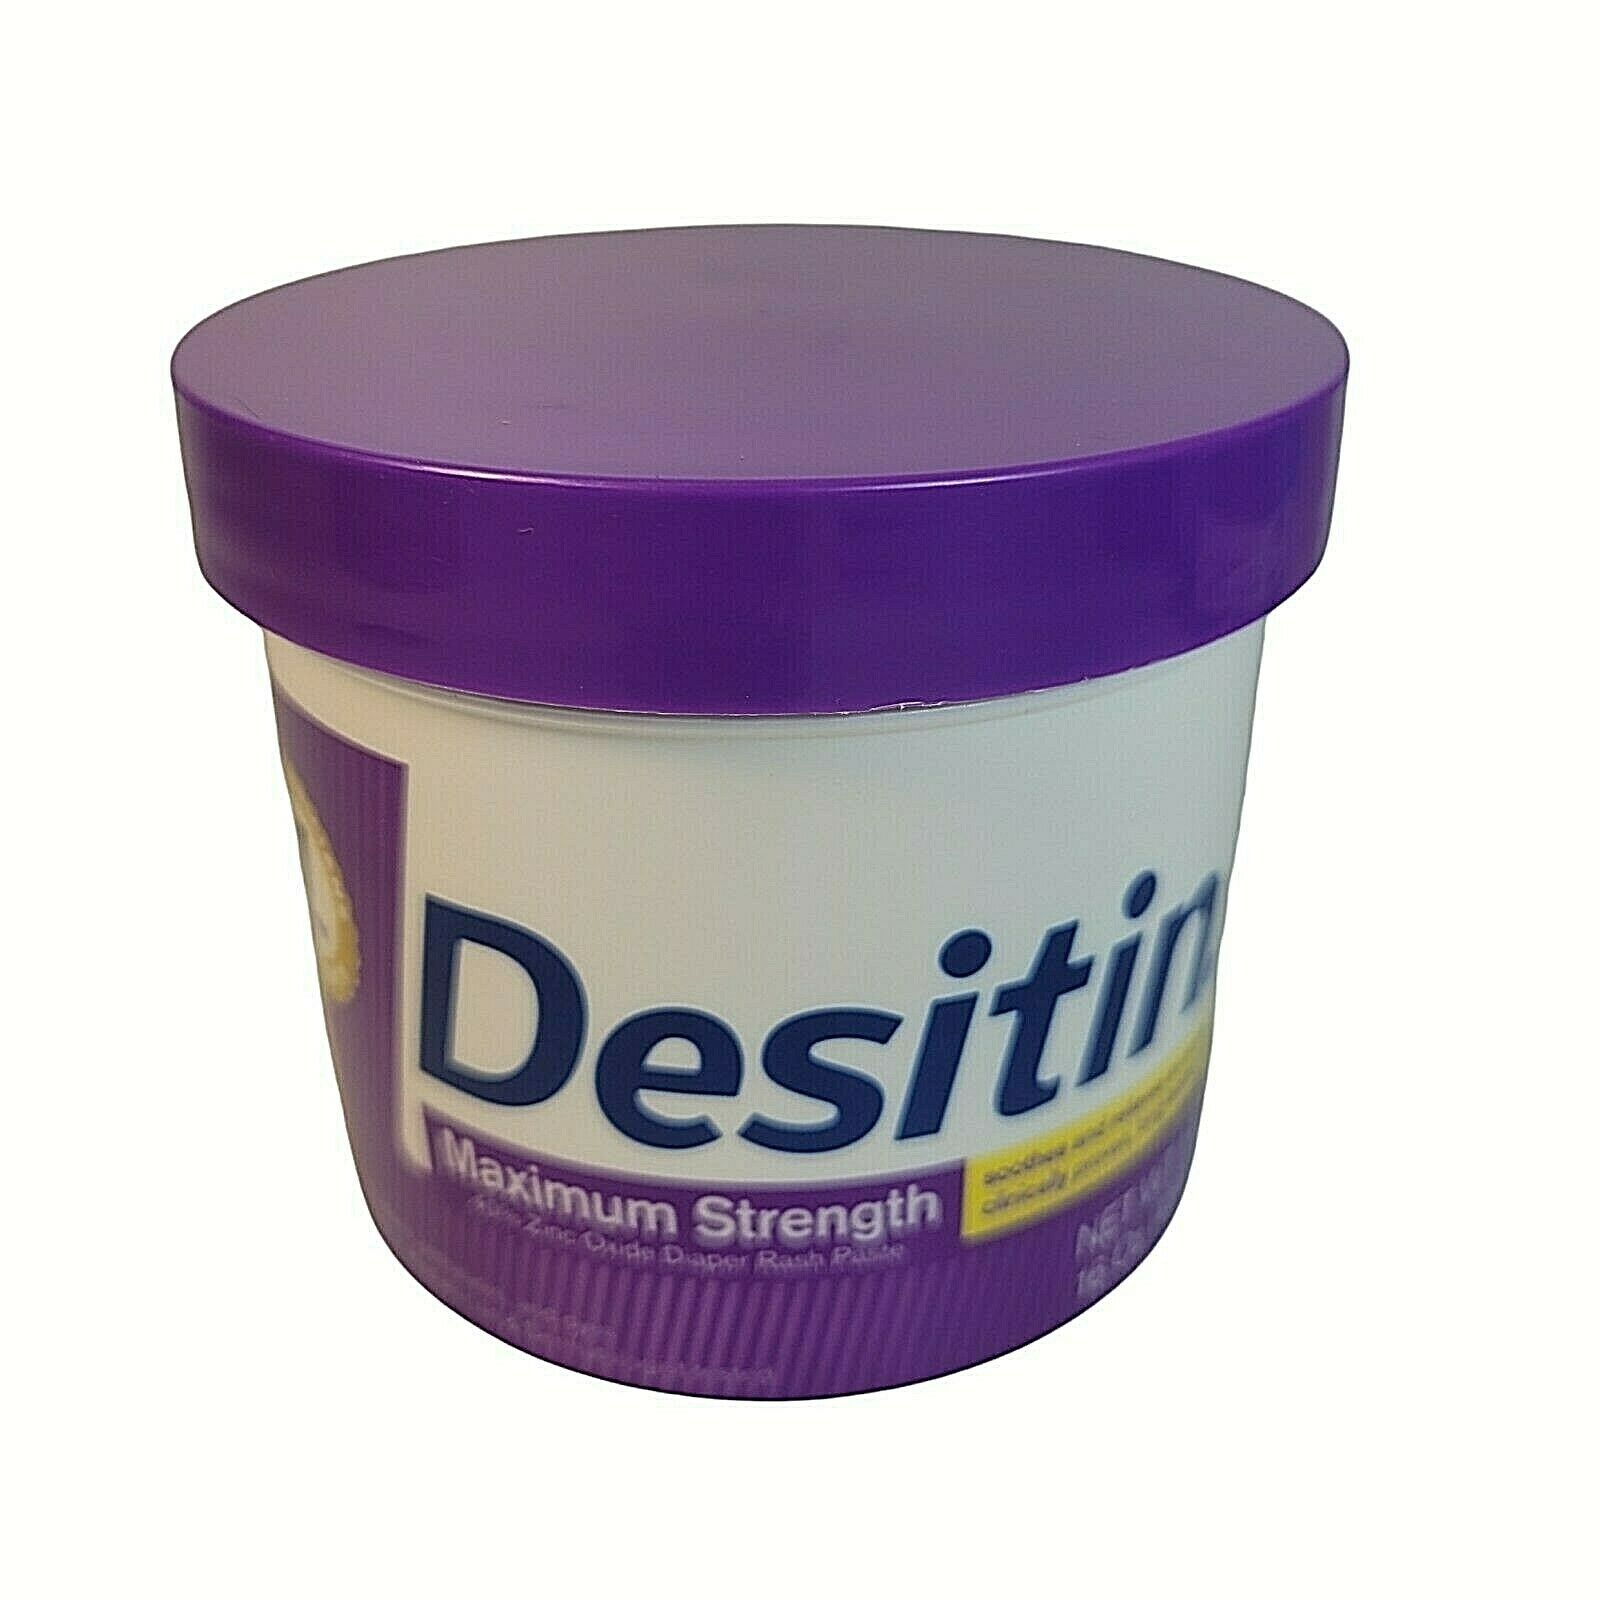 Desitin Maximum Strength Diaper Rash Cream w/ Zinc Oxide 16 oz DAMAGED tub Pics!